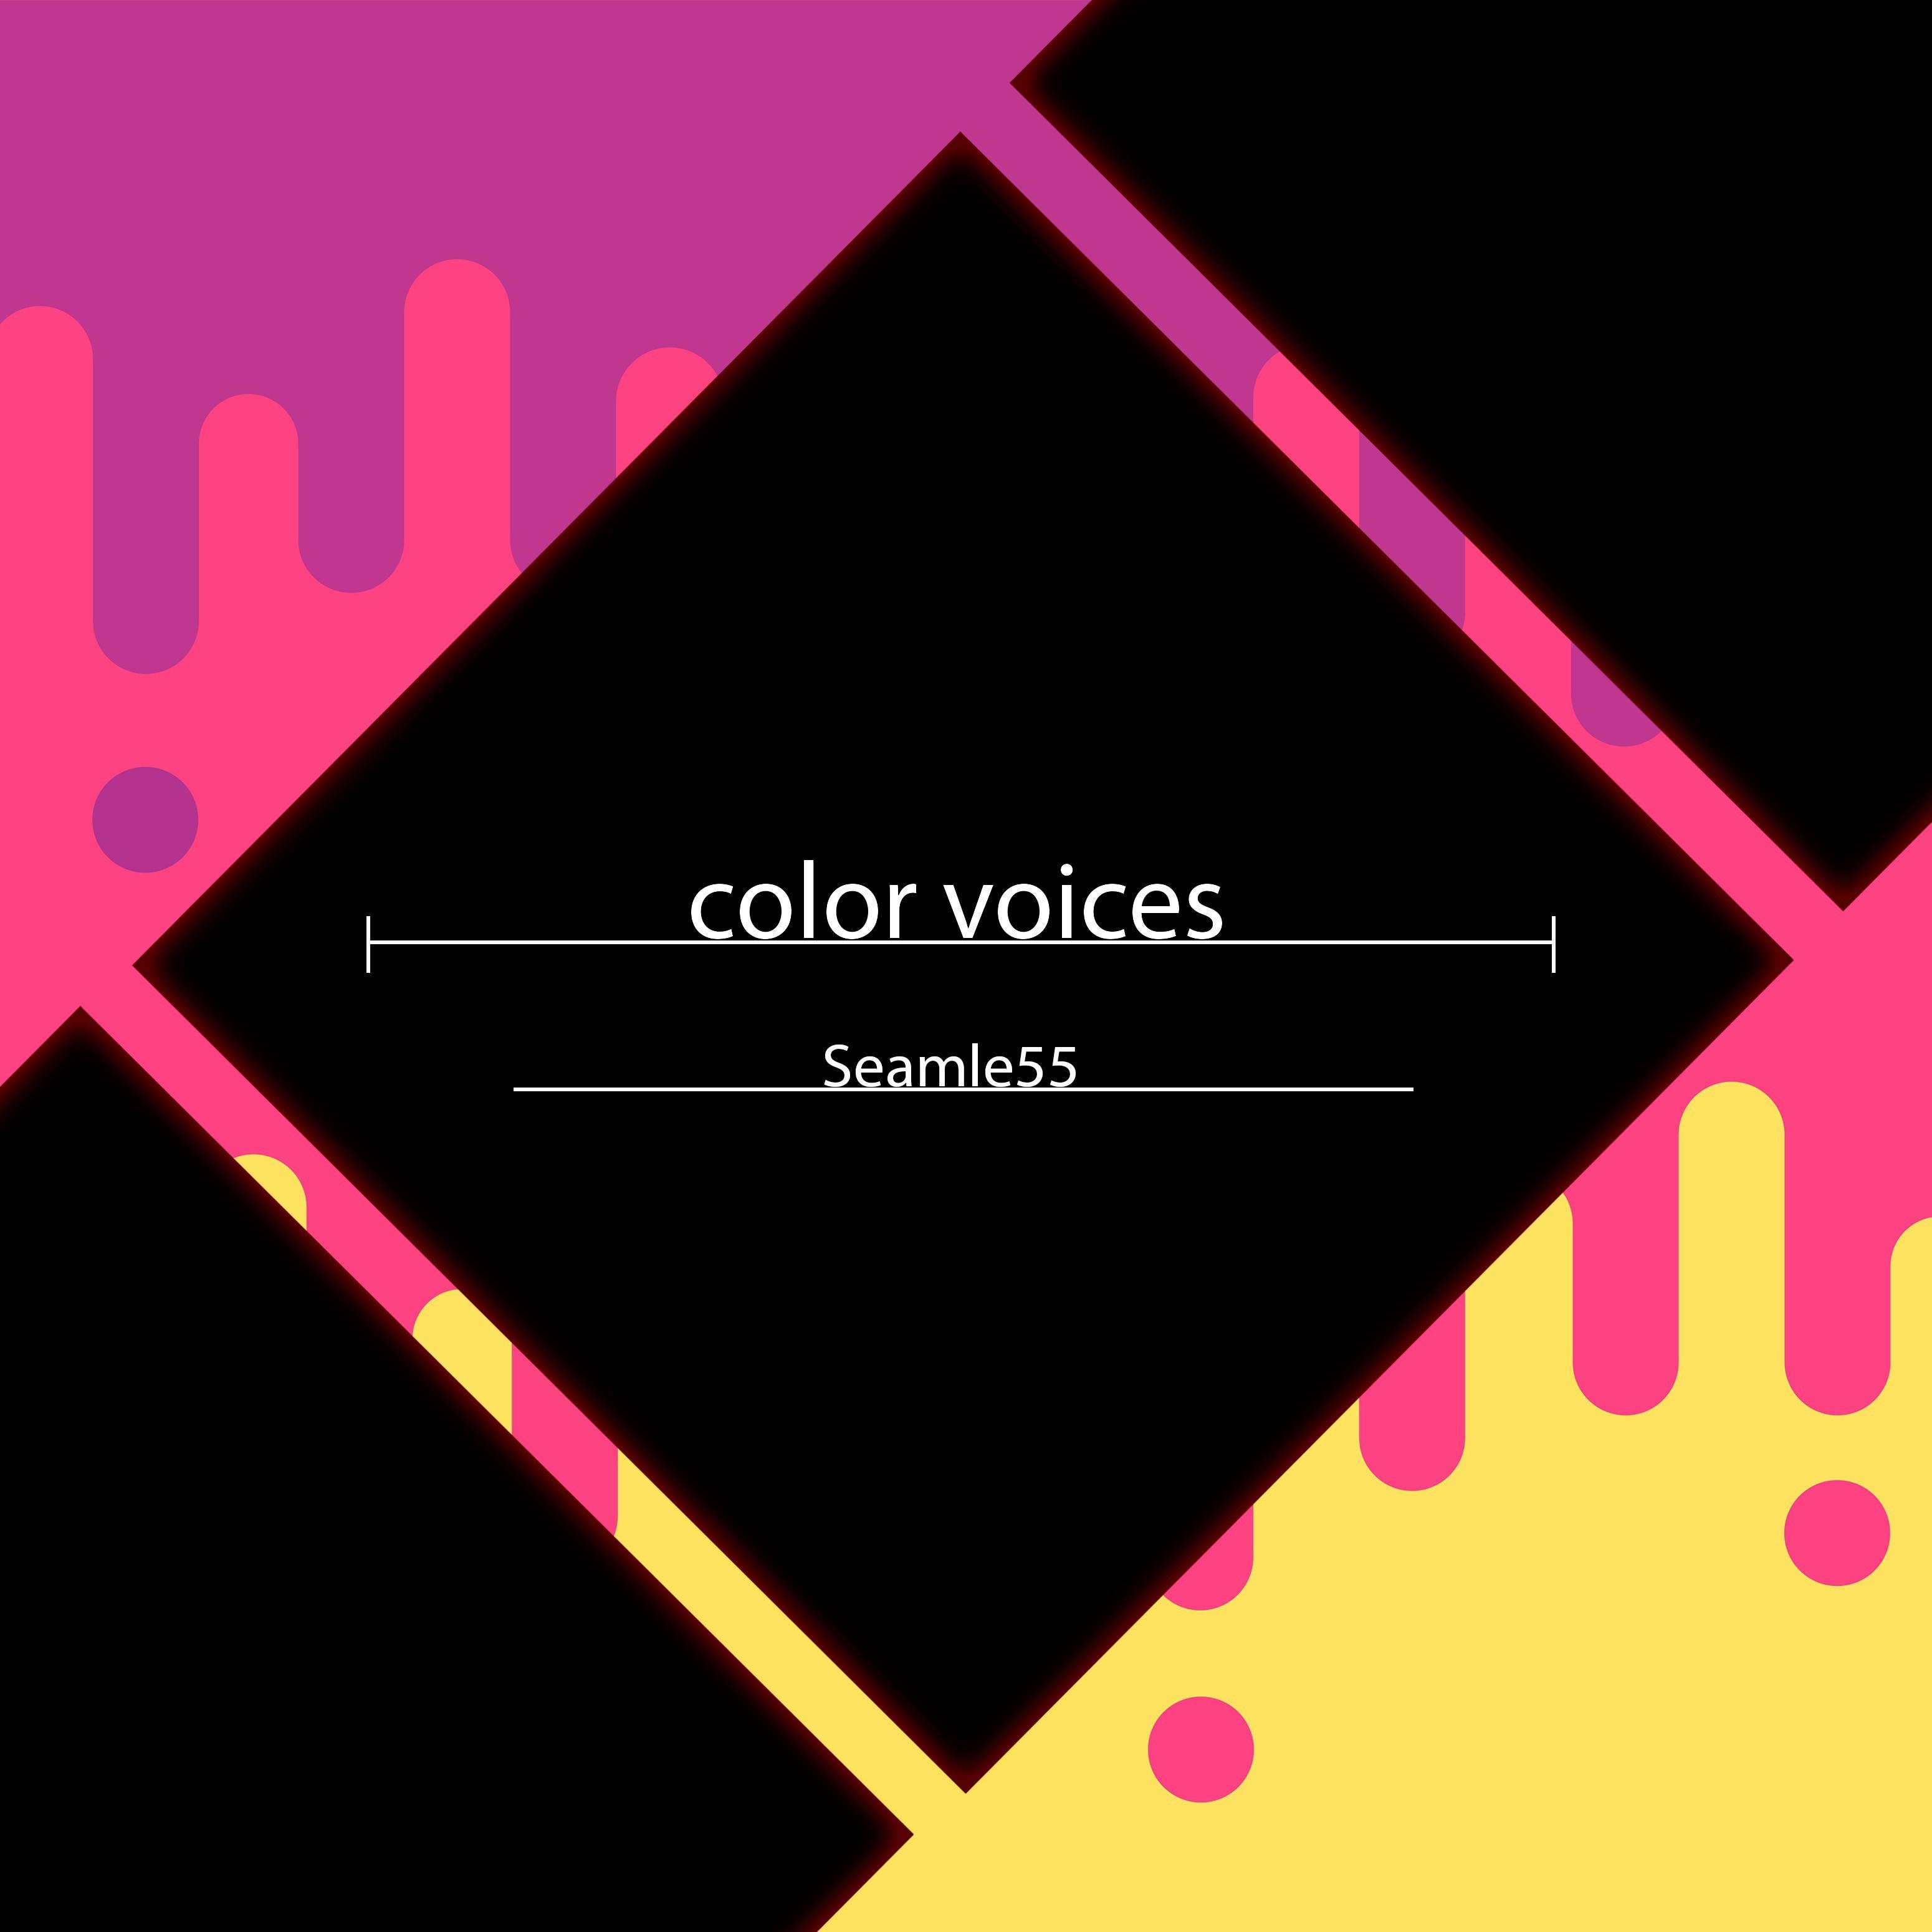 Coloured Voices. Voice of Color. Voice Coloring. Four Voice Colors. Voice colouring